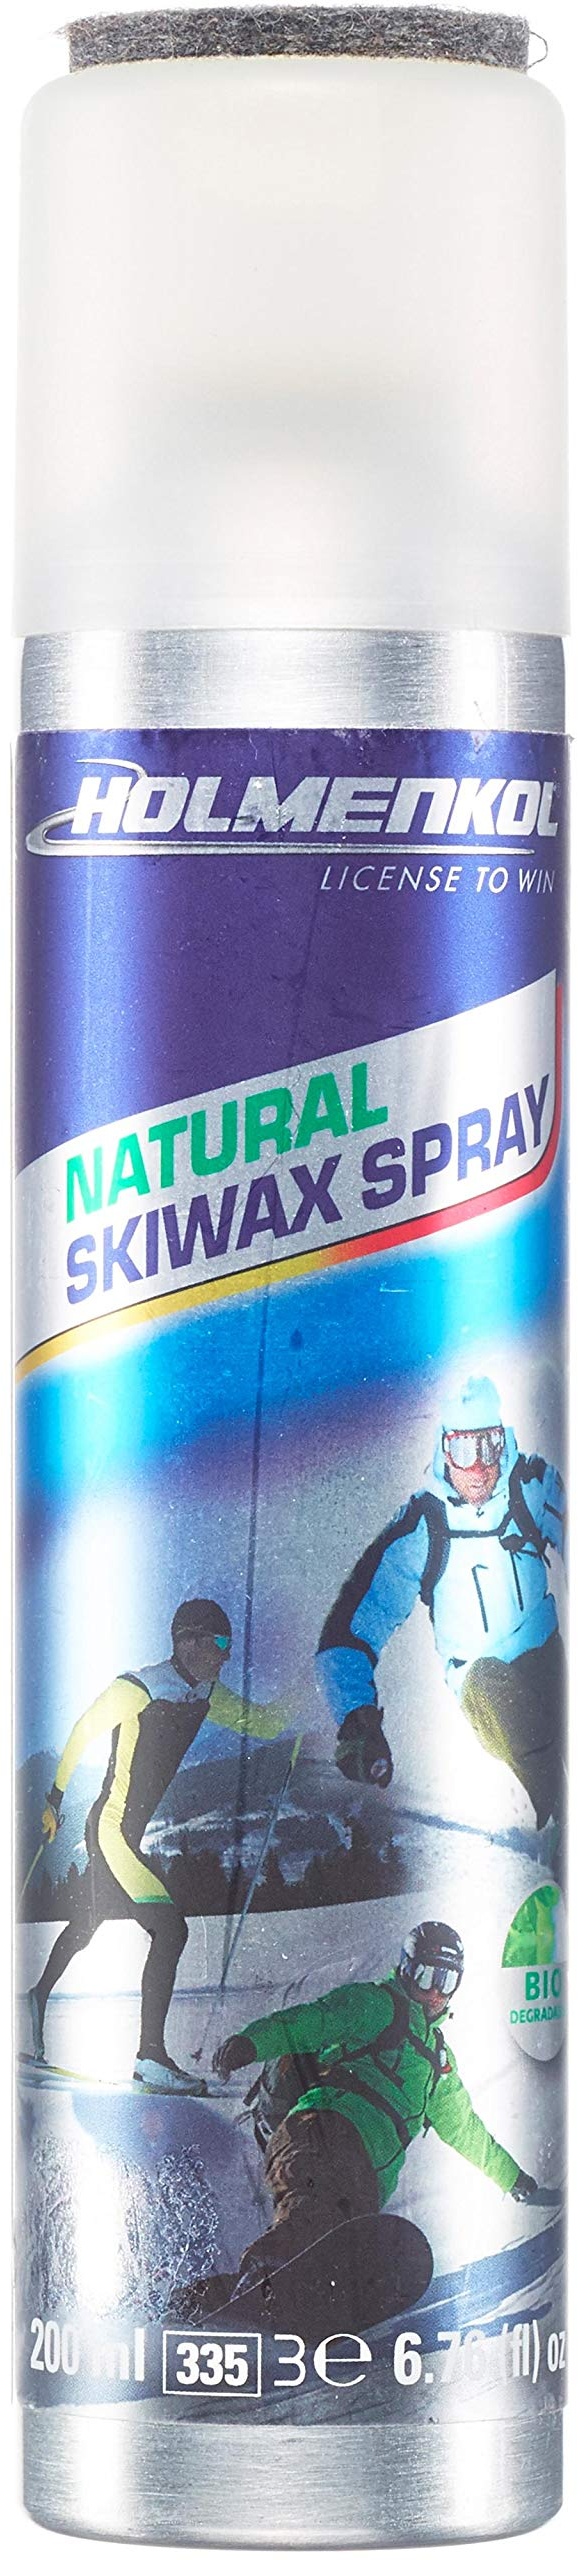 holmenkol natural wax spray